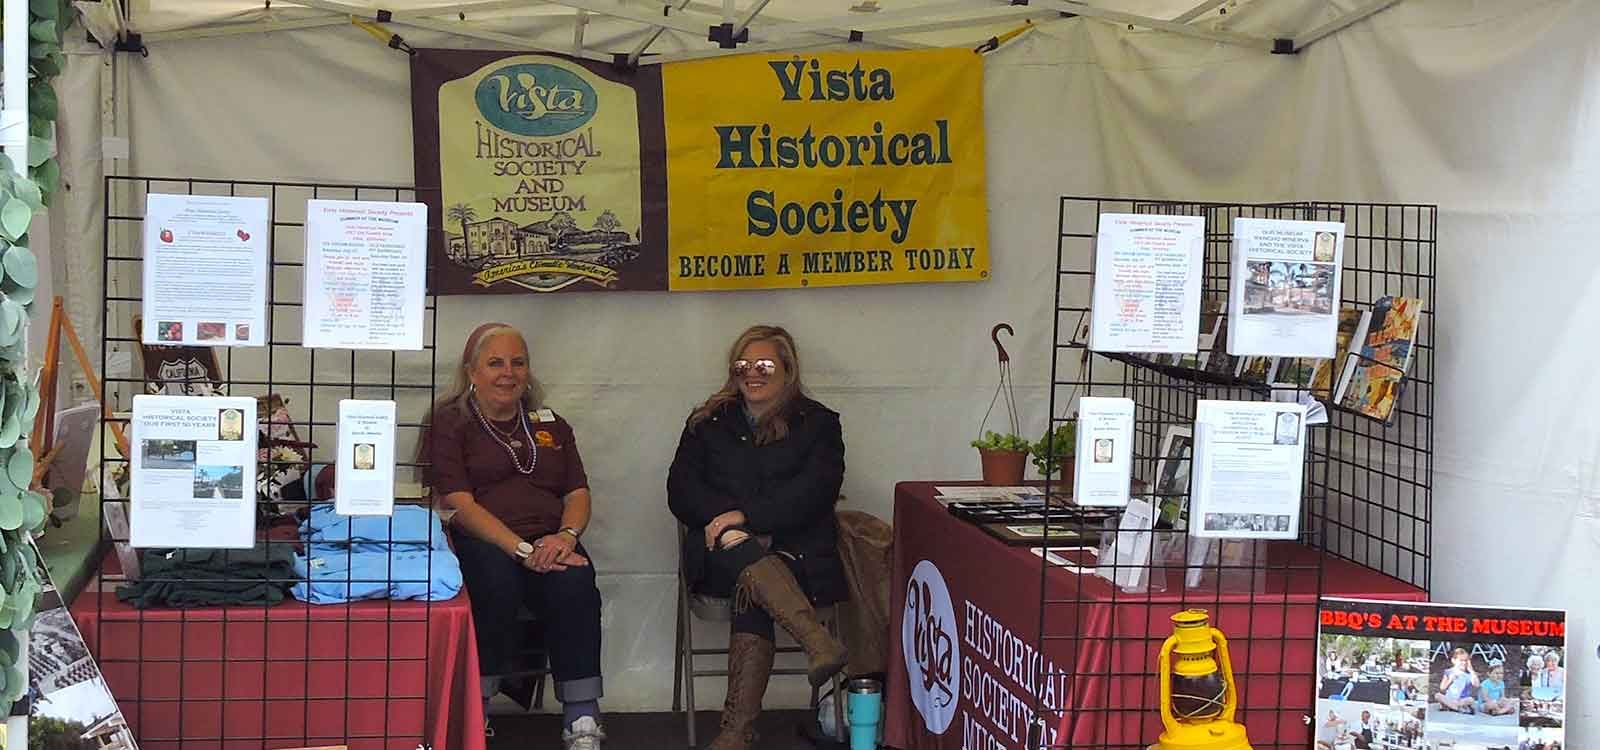 Vista-Historical-Society-